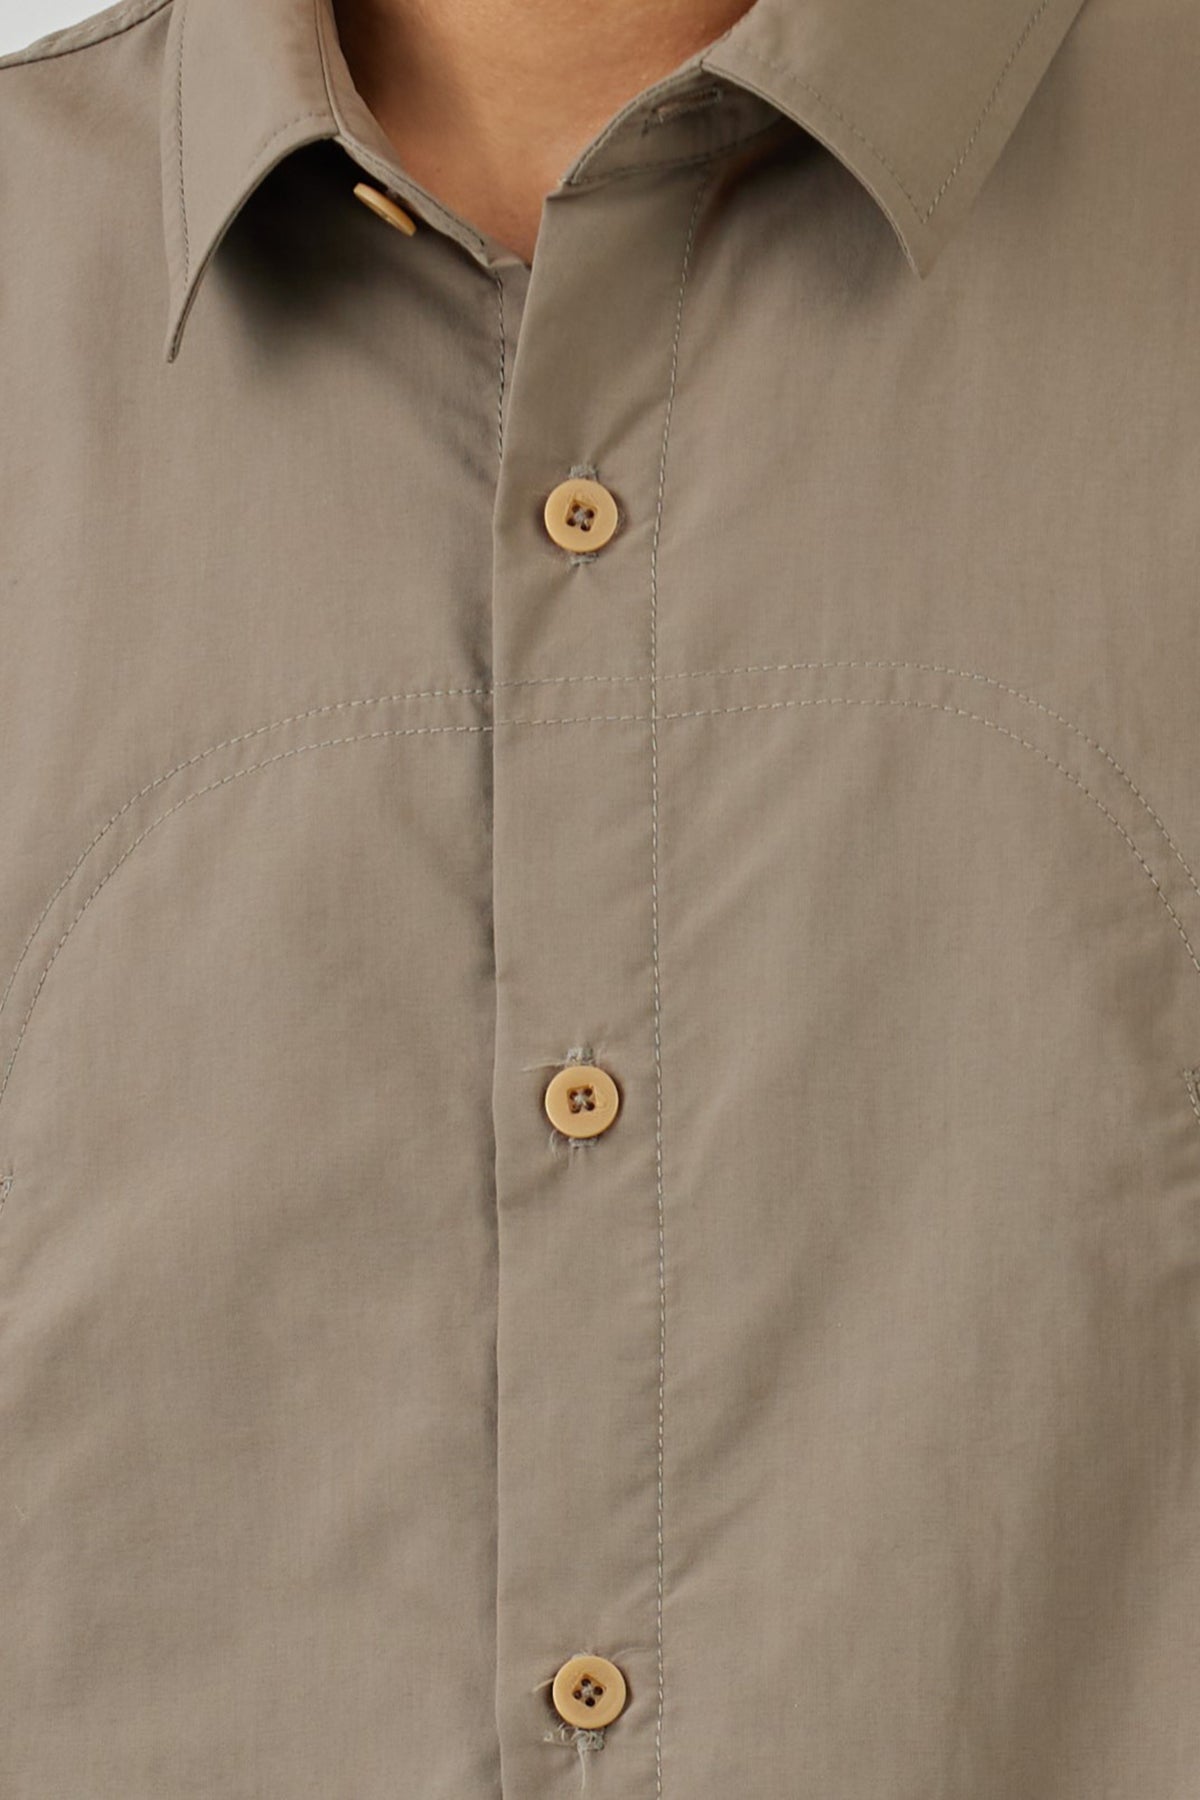 Olive Drab Multi-Pocket Shirt